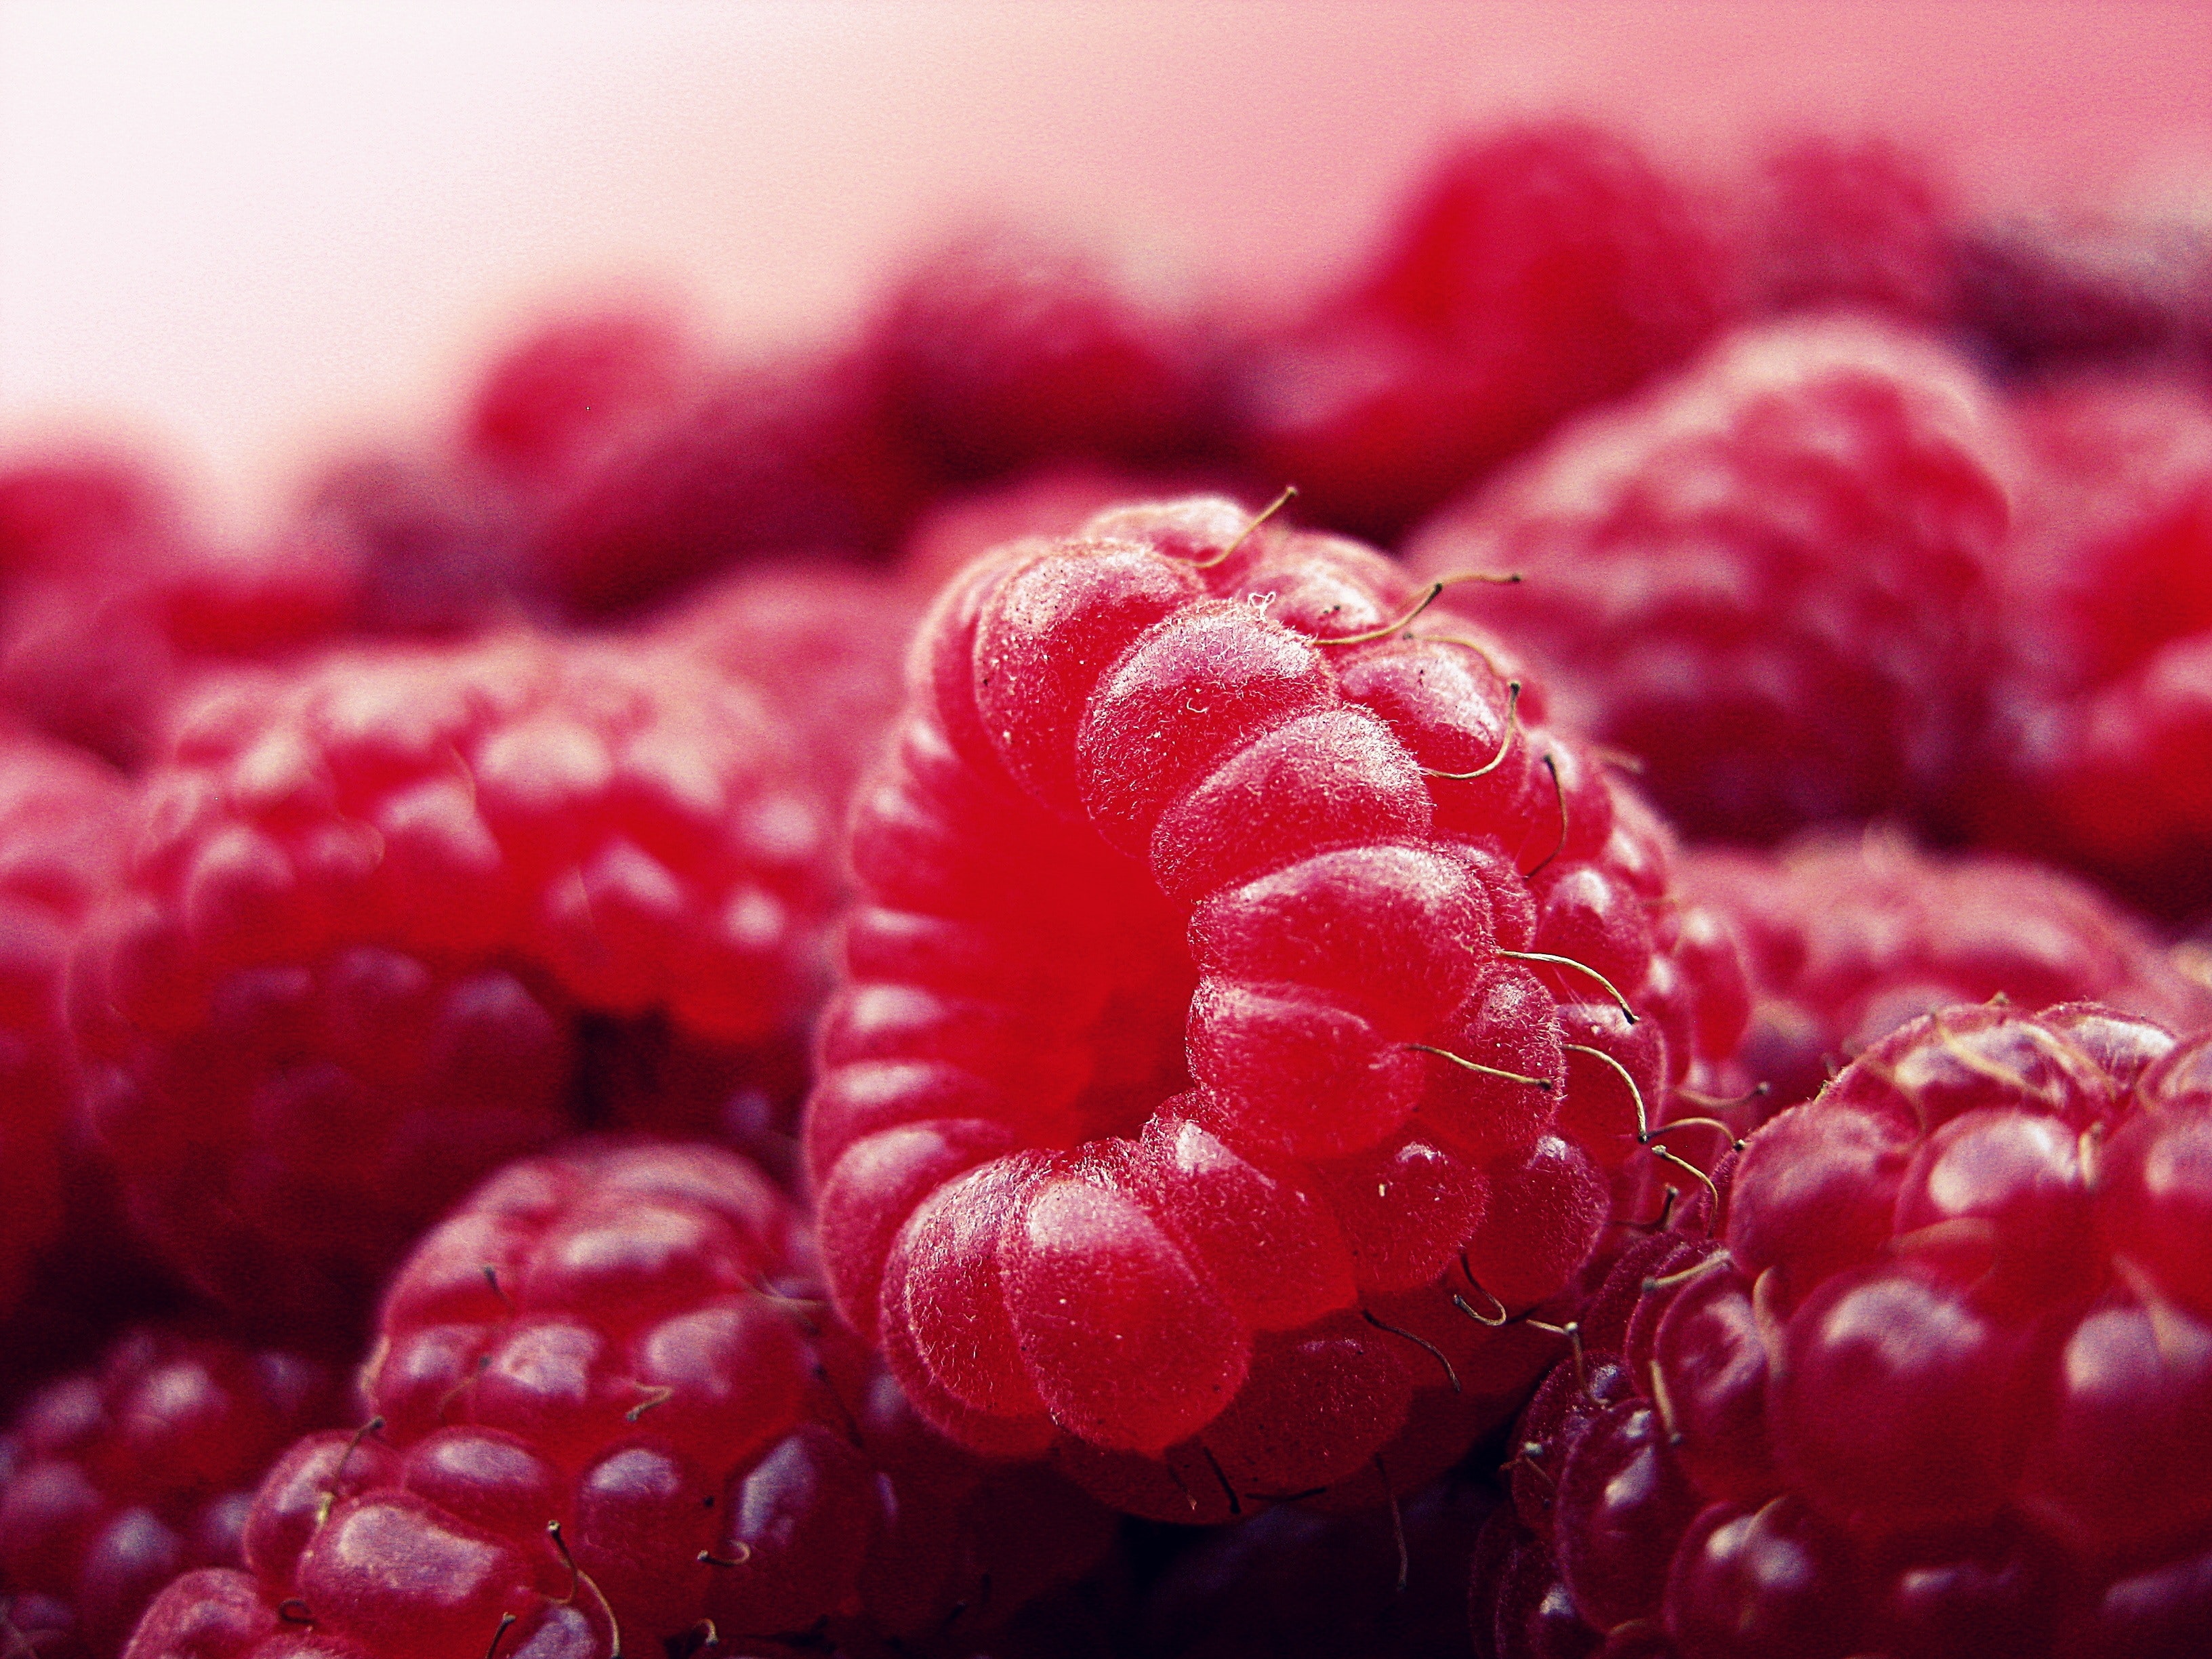 Serbia among top 3 global raspberry producers